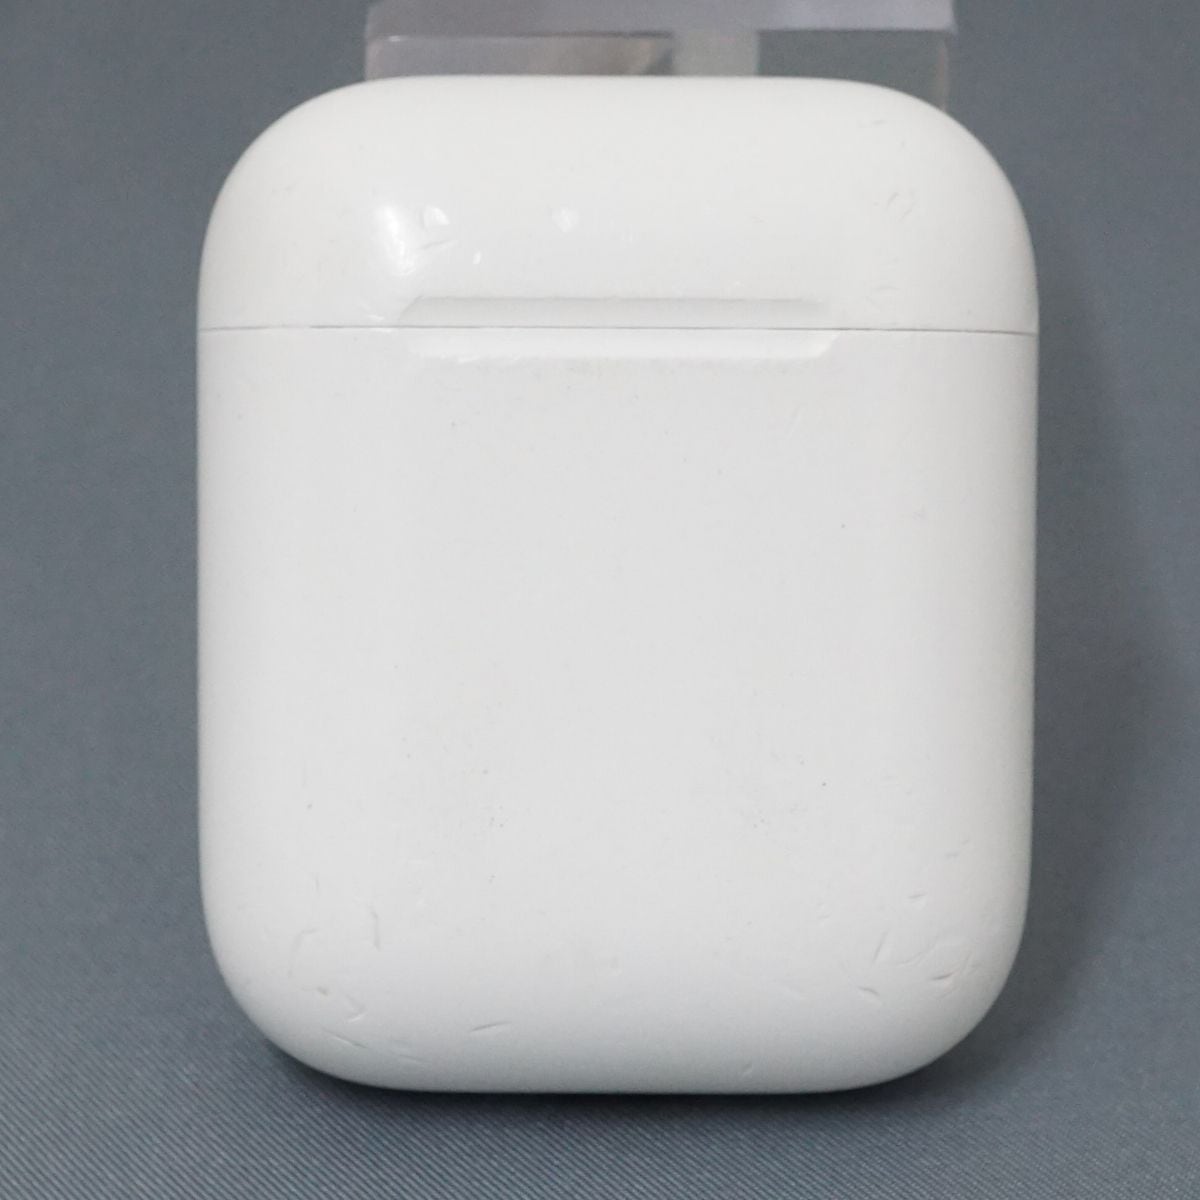 Apple純正 第1世代 AirPods用 充電ケースのみ